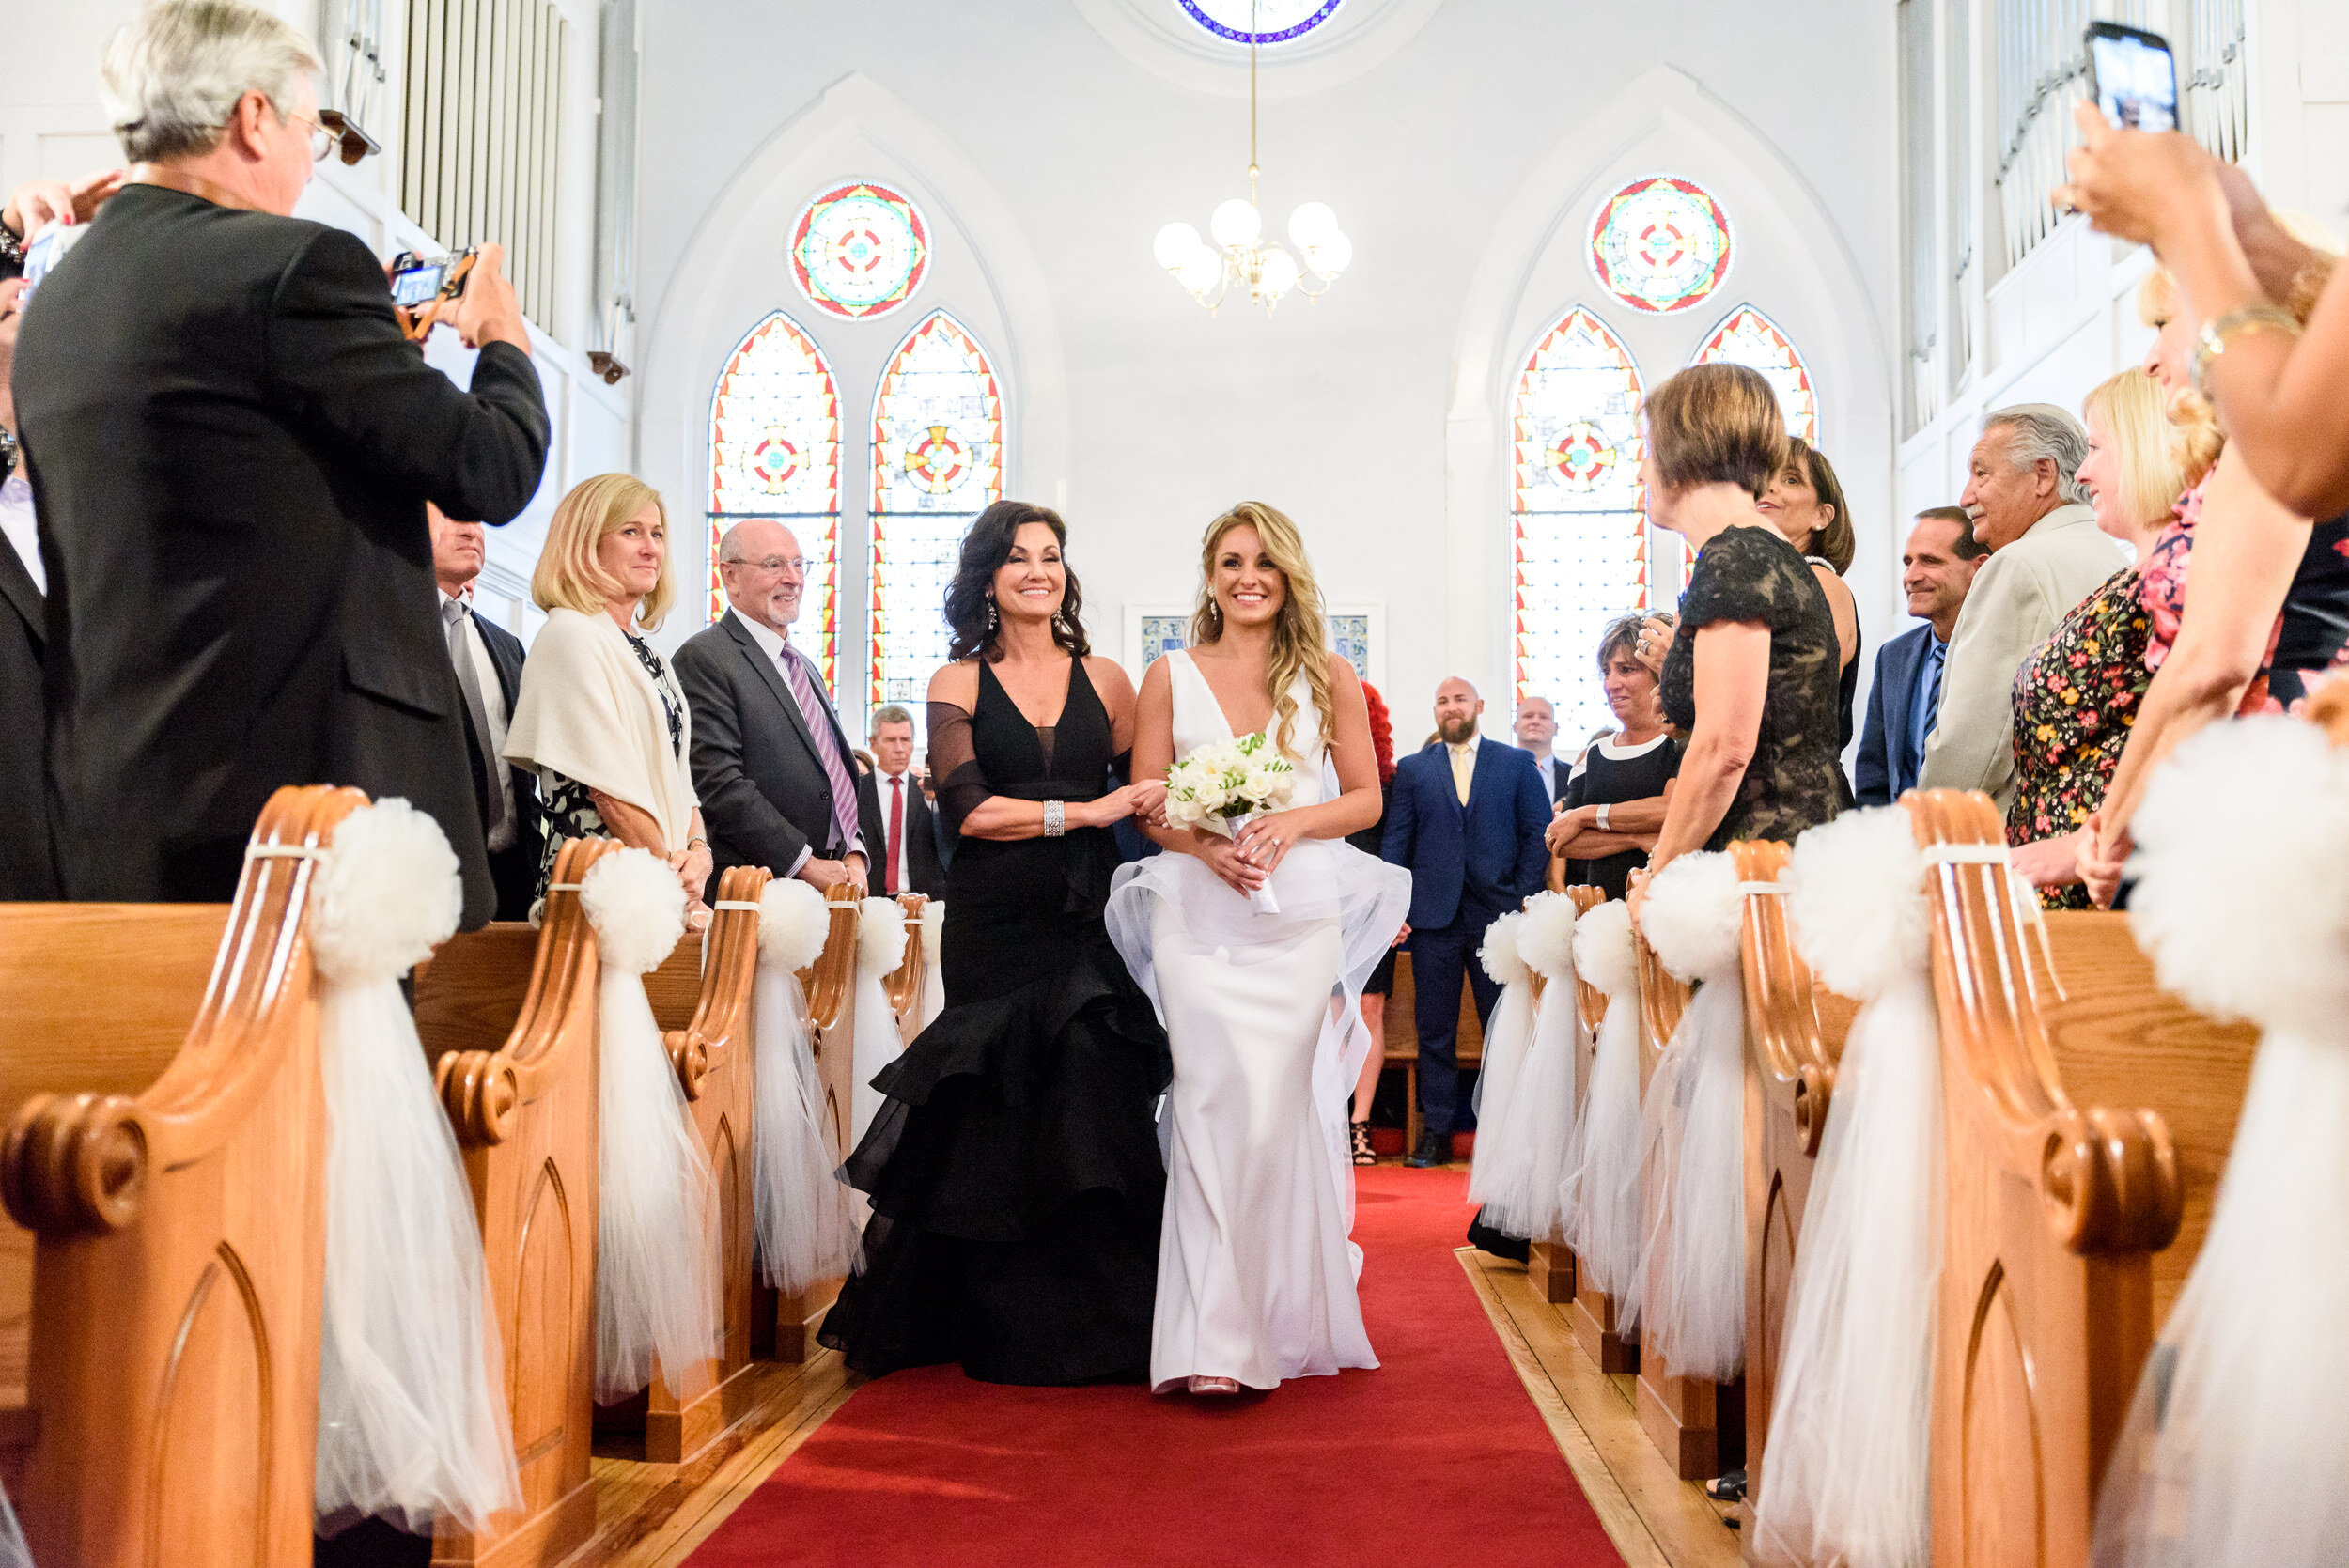 Church wedding ceremony in Cape May, NJ